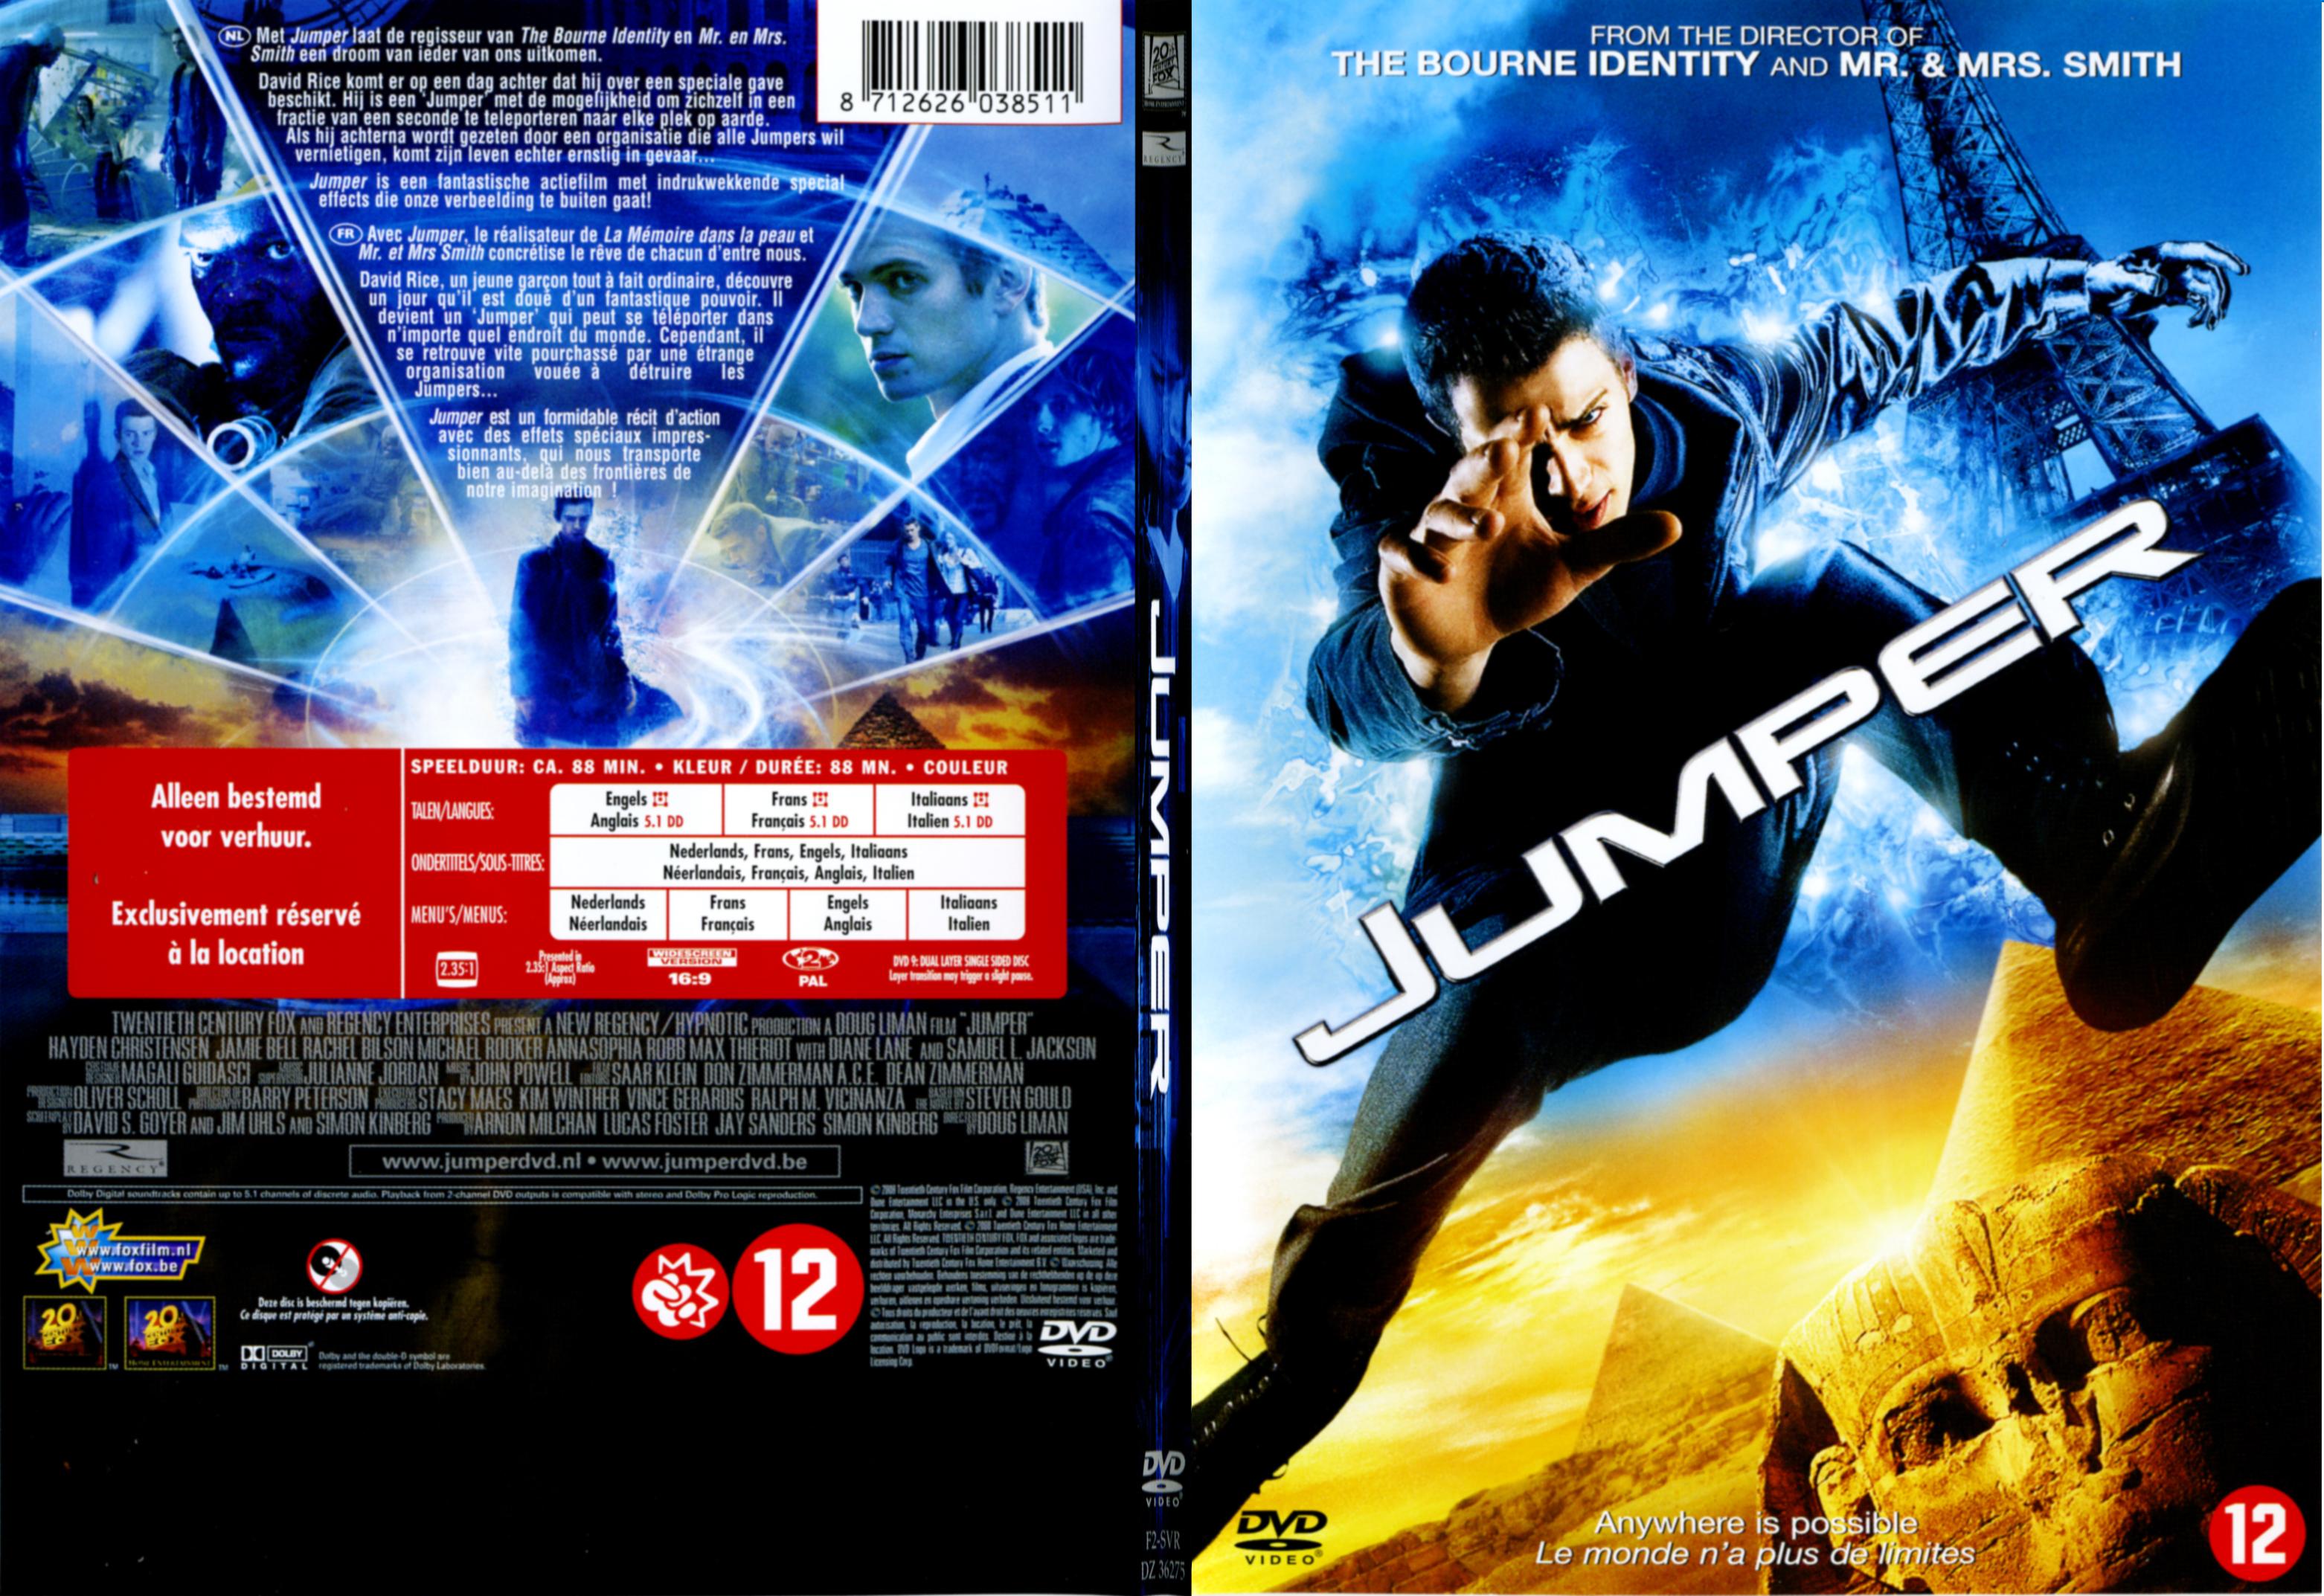 Jaquette DVD Jumper - SLIM